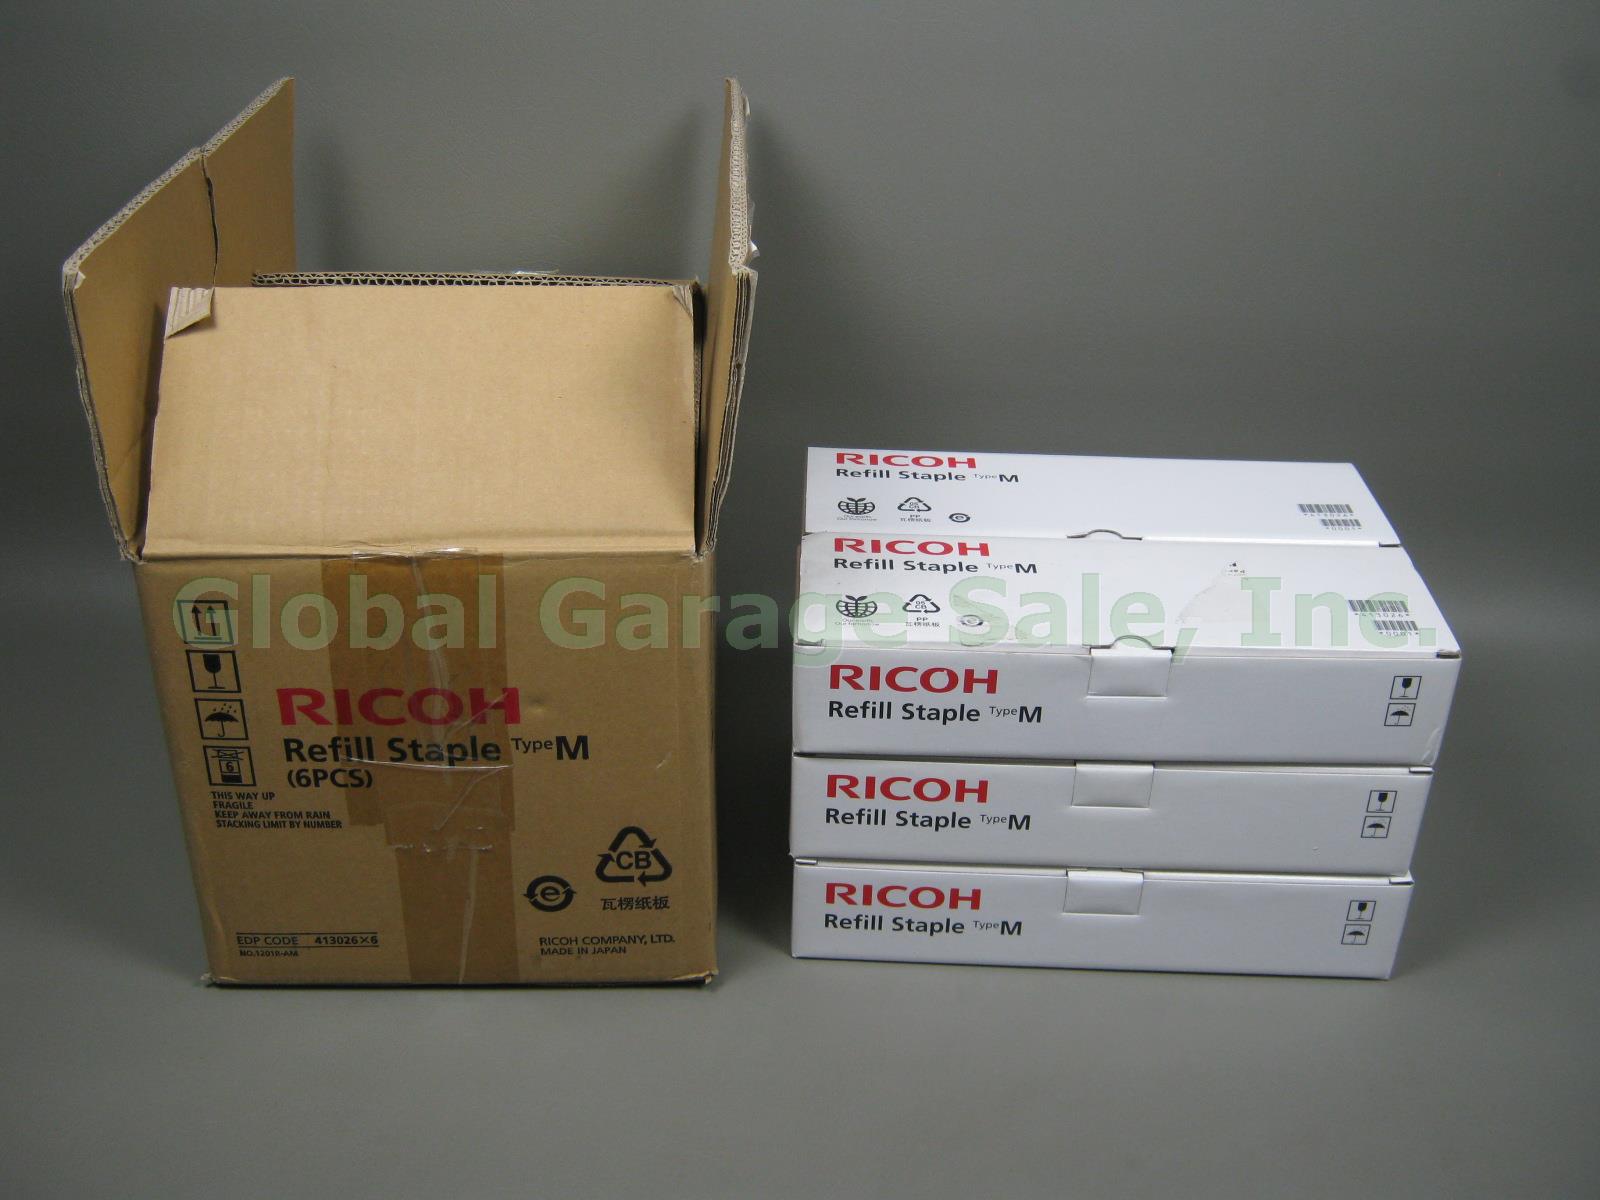 Full Case Ricoh Refill Staple Type M 413026 1201-AM 6 Boxes 30 Cartridges Lot NR